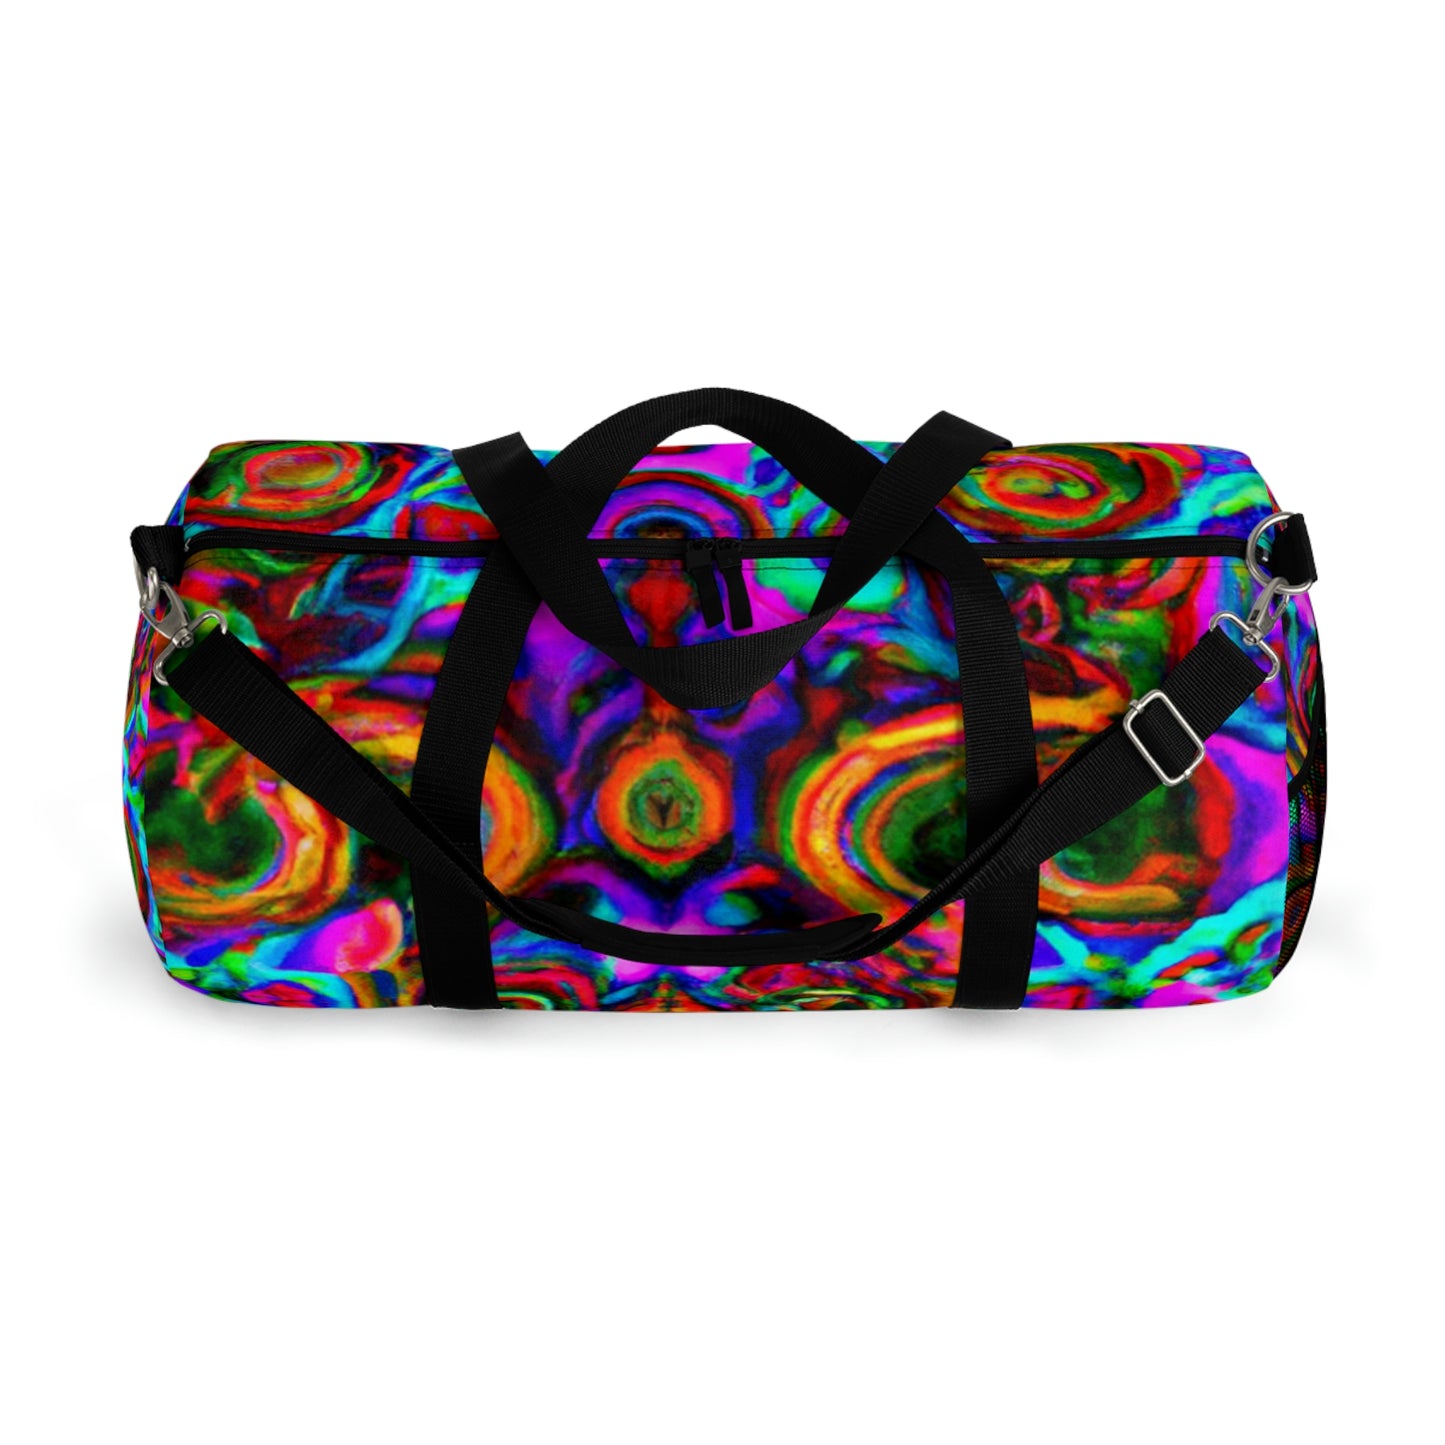 Fiorilli - Psychedelic Duffel Bag